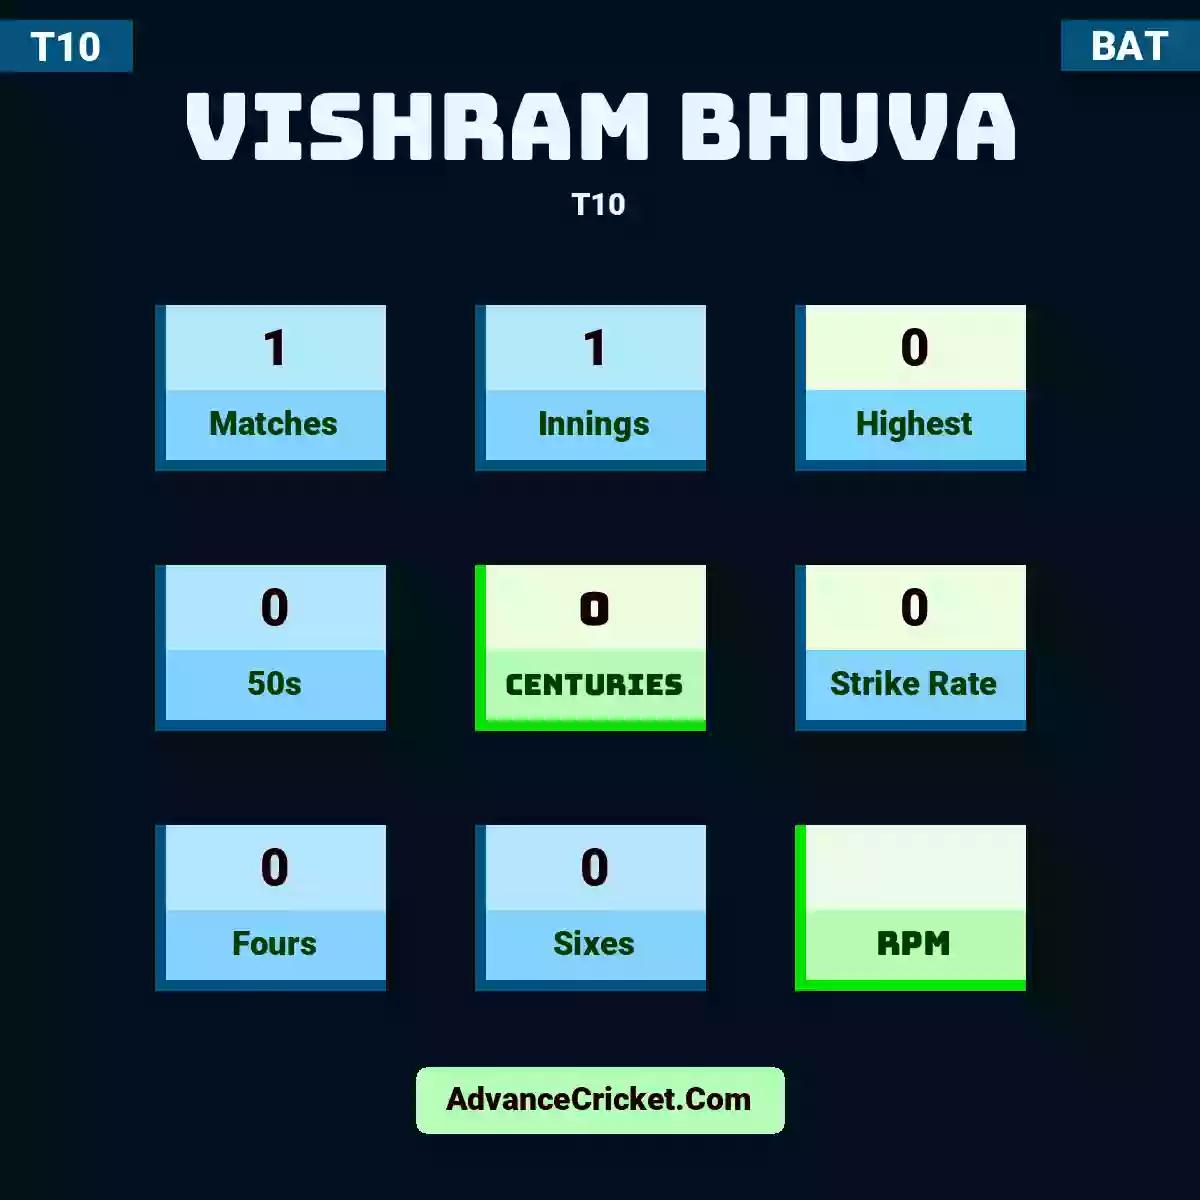 Vishram Bhuva T10 , Vishram Bhuva played 1 matches, scored 0 runs as highest, 0 half-centuries, and 0 centuries, with a strike rate of 0. V.Bhuva hit 0 fours and 0 sixes.